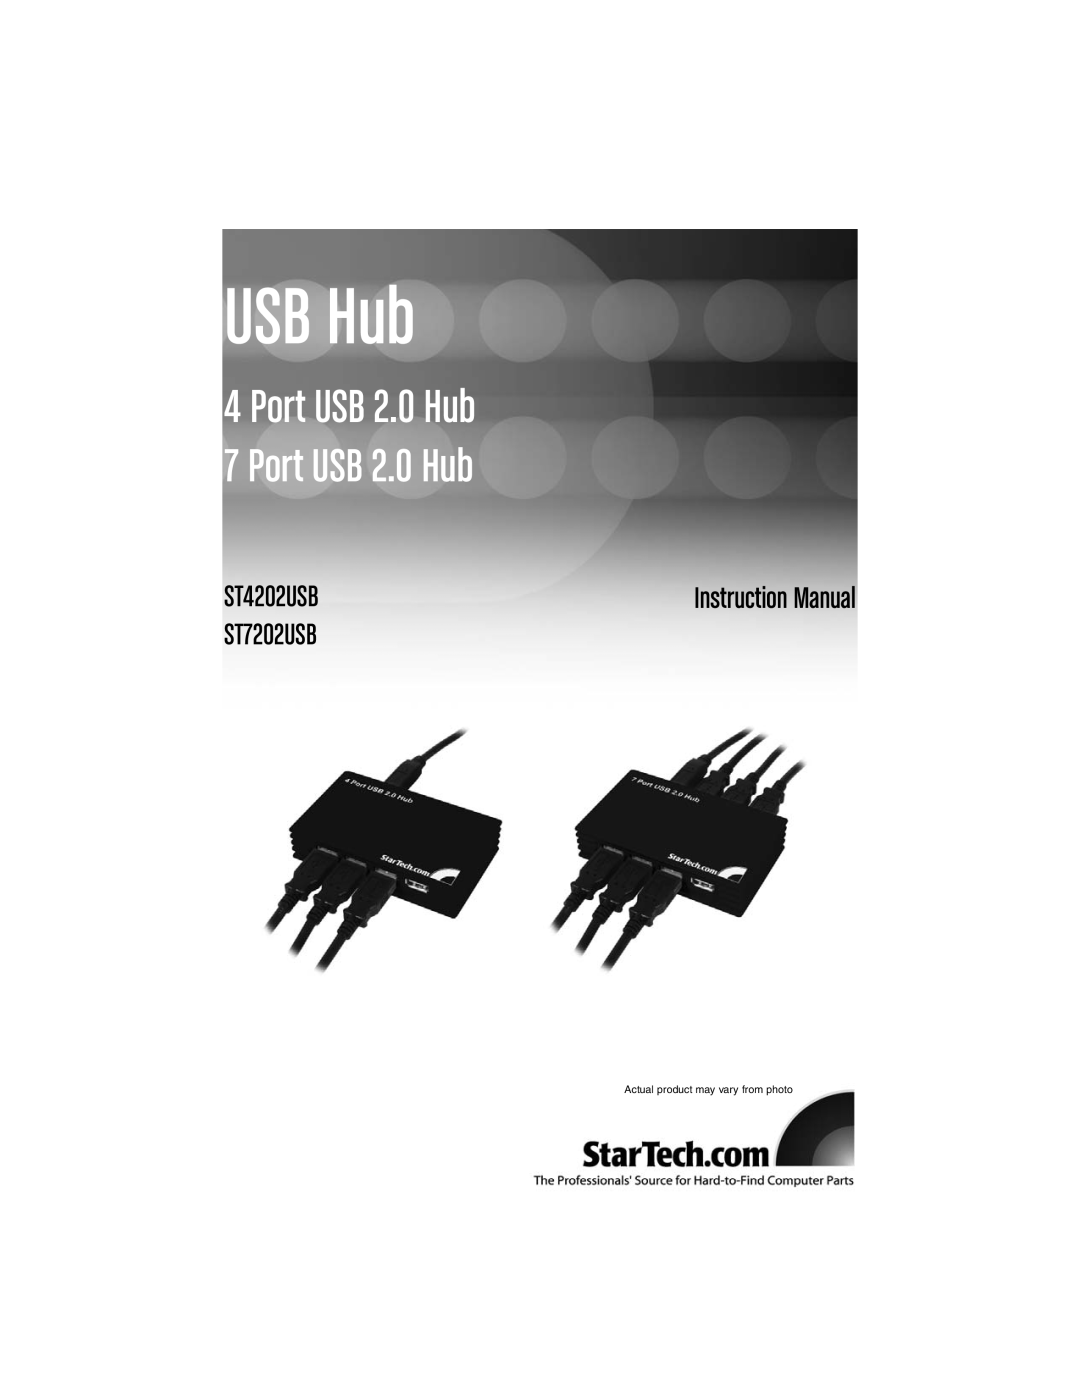 StarTech.com ST7202USB instruction manual USB Hub, Port USB 2.0 Hub 7 Port USB 2.0 Hub, ST4202USB, Instruction Manual 